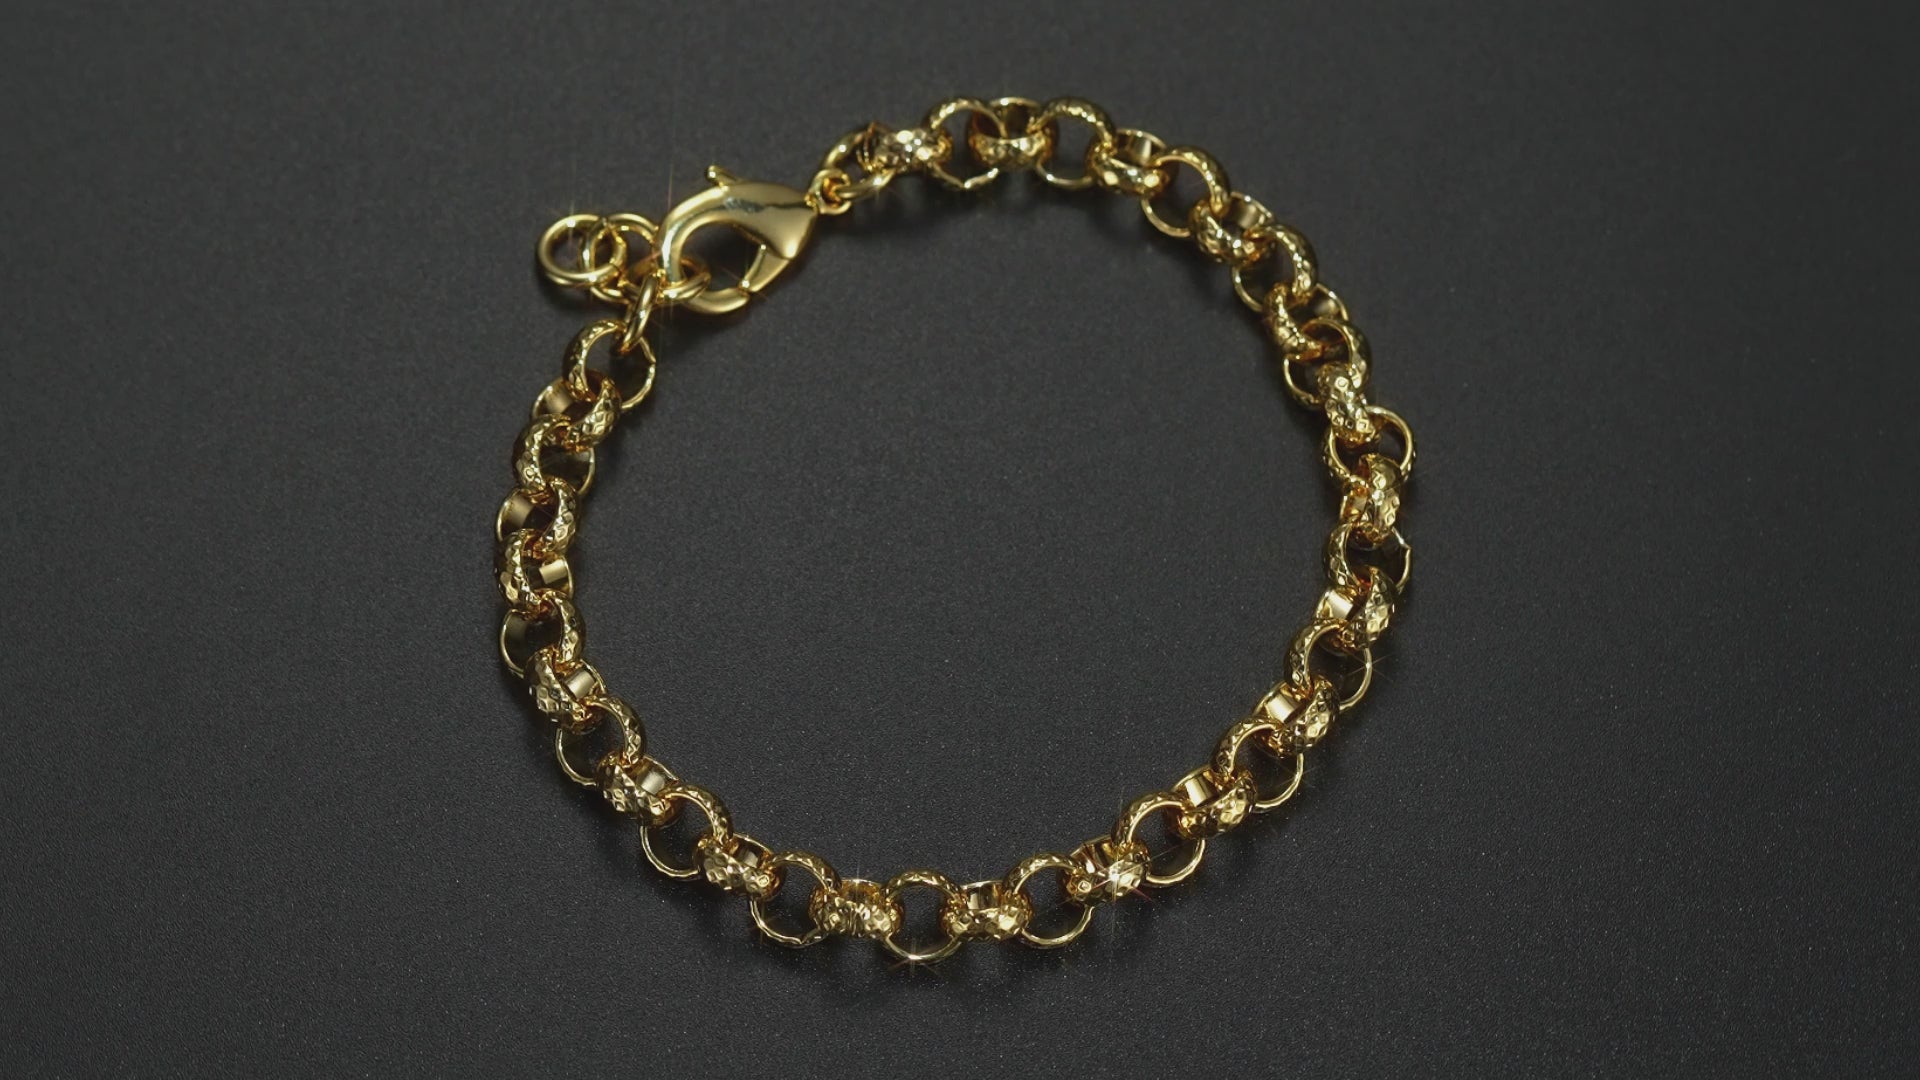 Luxury Gold 8mm Diamond Cut Pattern Belcher Bracelet and Chain Set (24 &amp; 8 Inches)